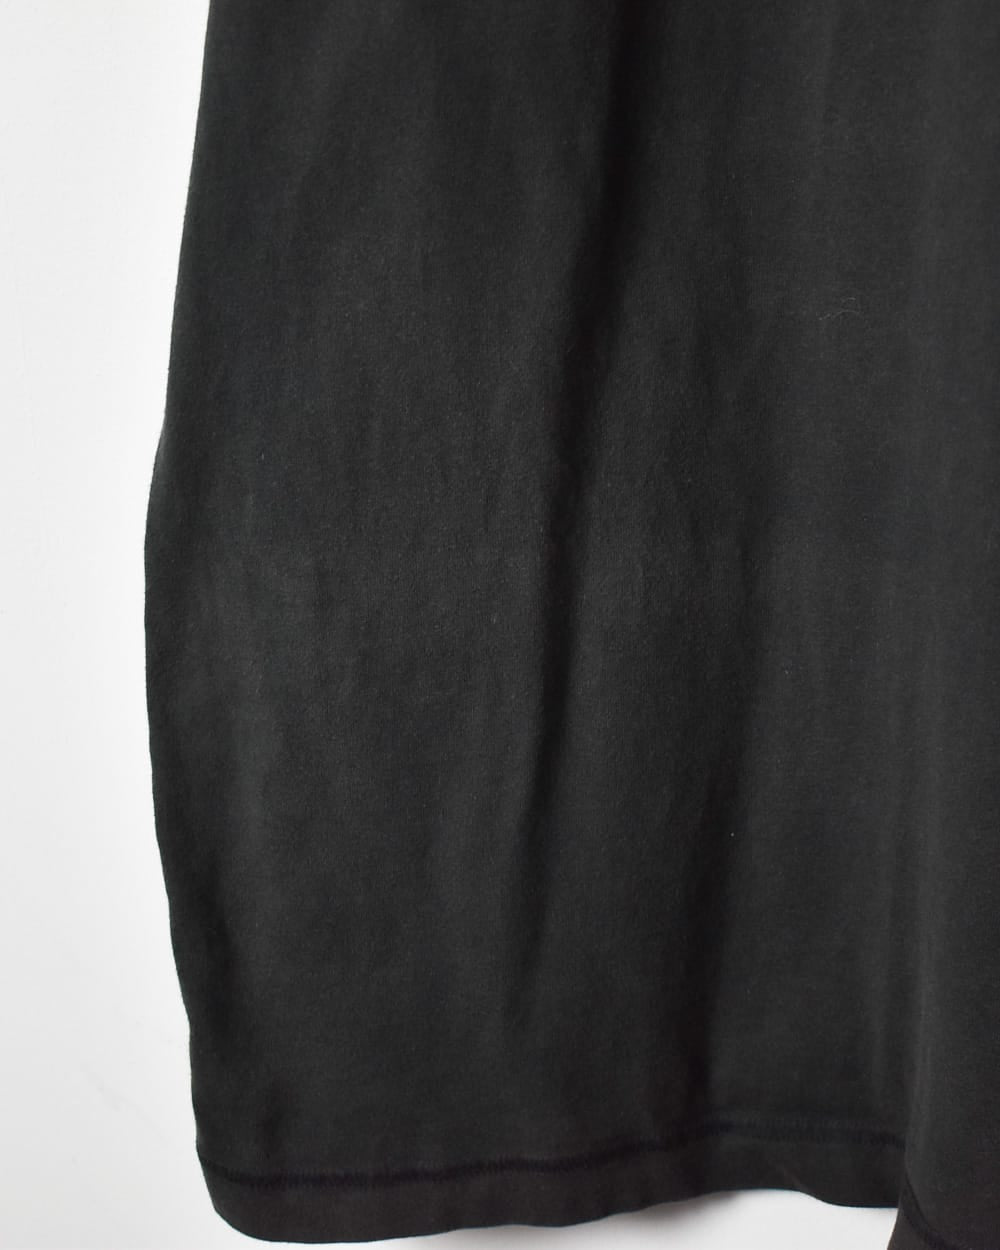 Black Nike Long Sleeved T-Shirt - X-Large